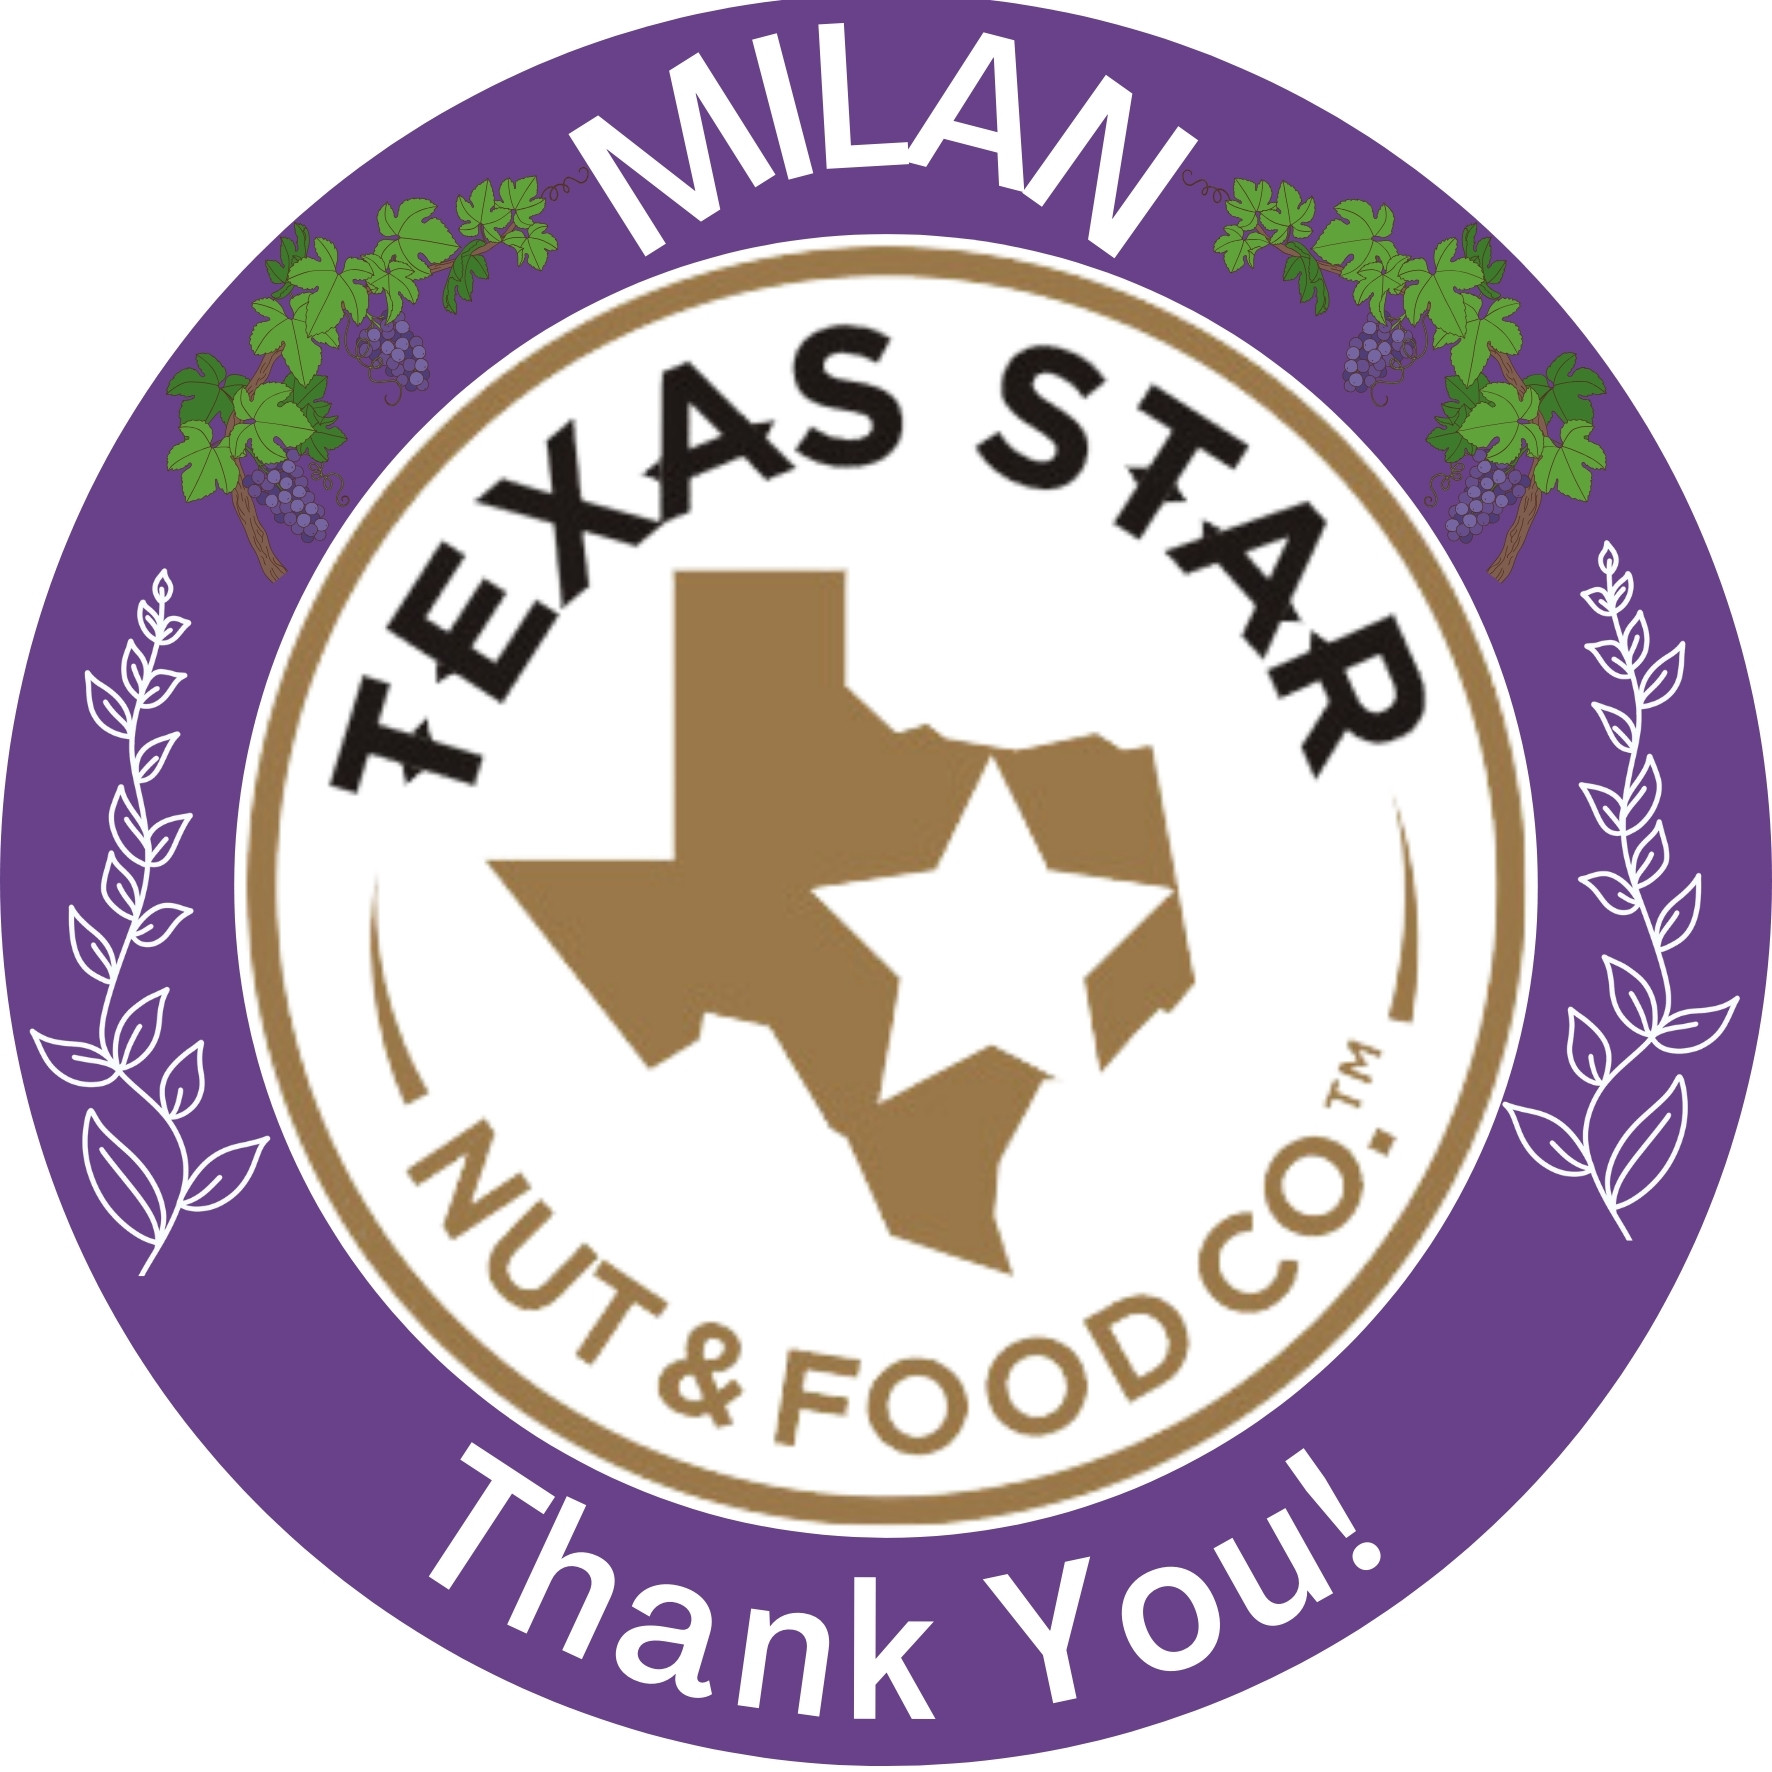 Texas Star Nut & Food Co. Sponsorship